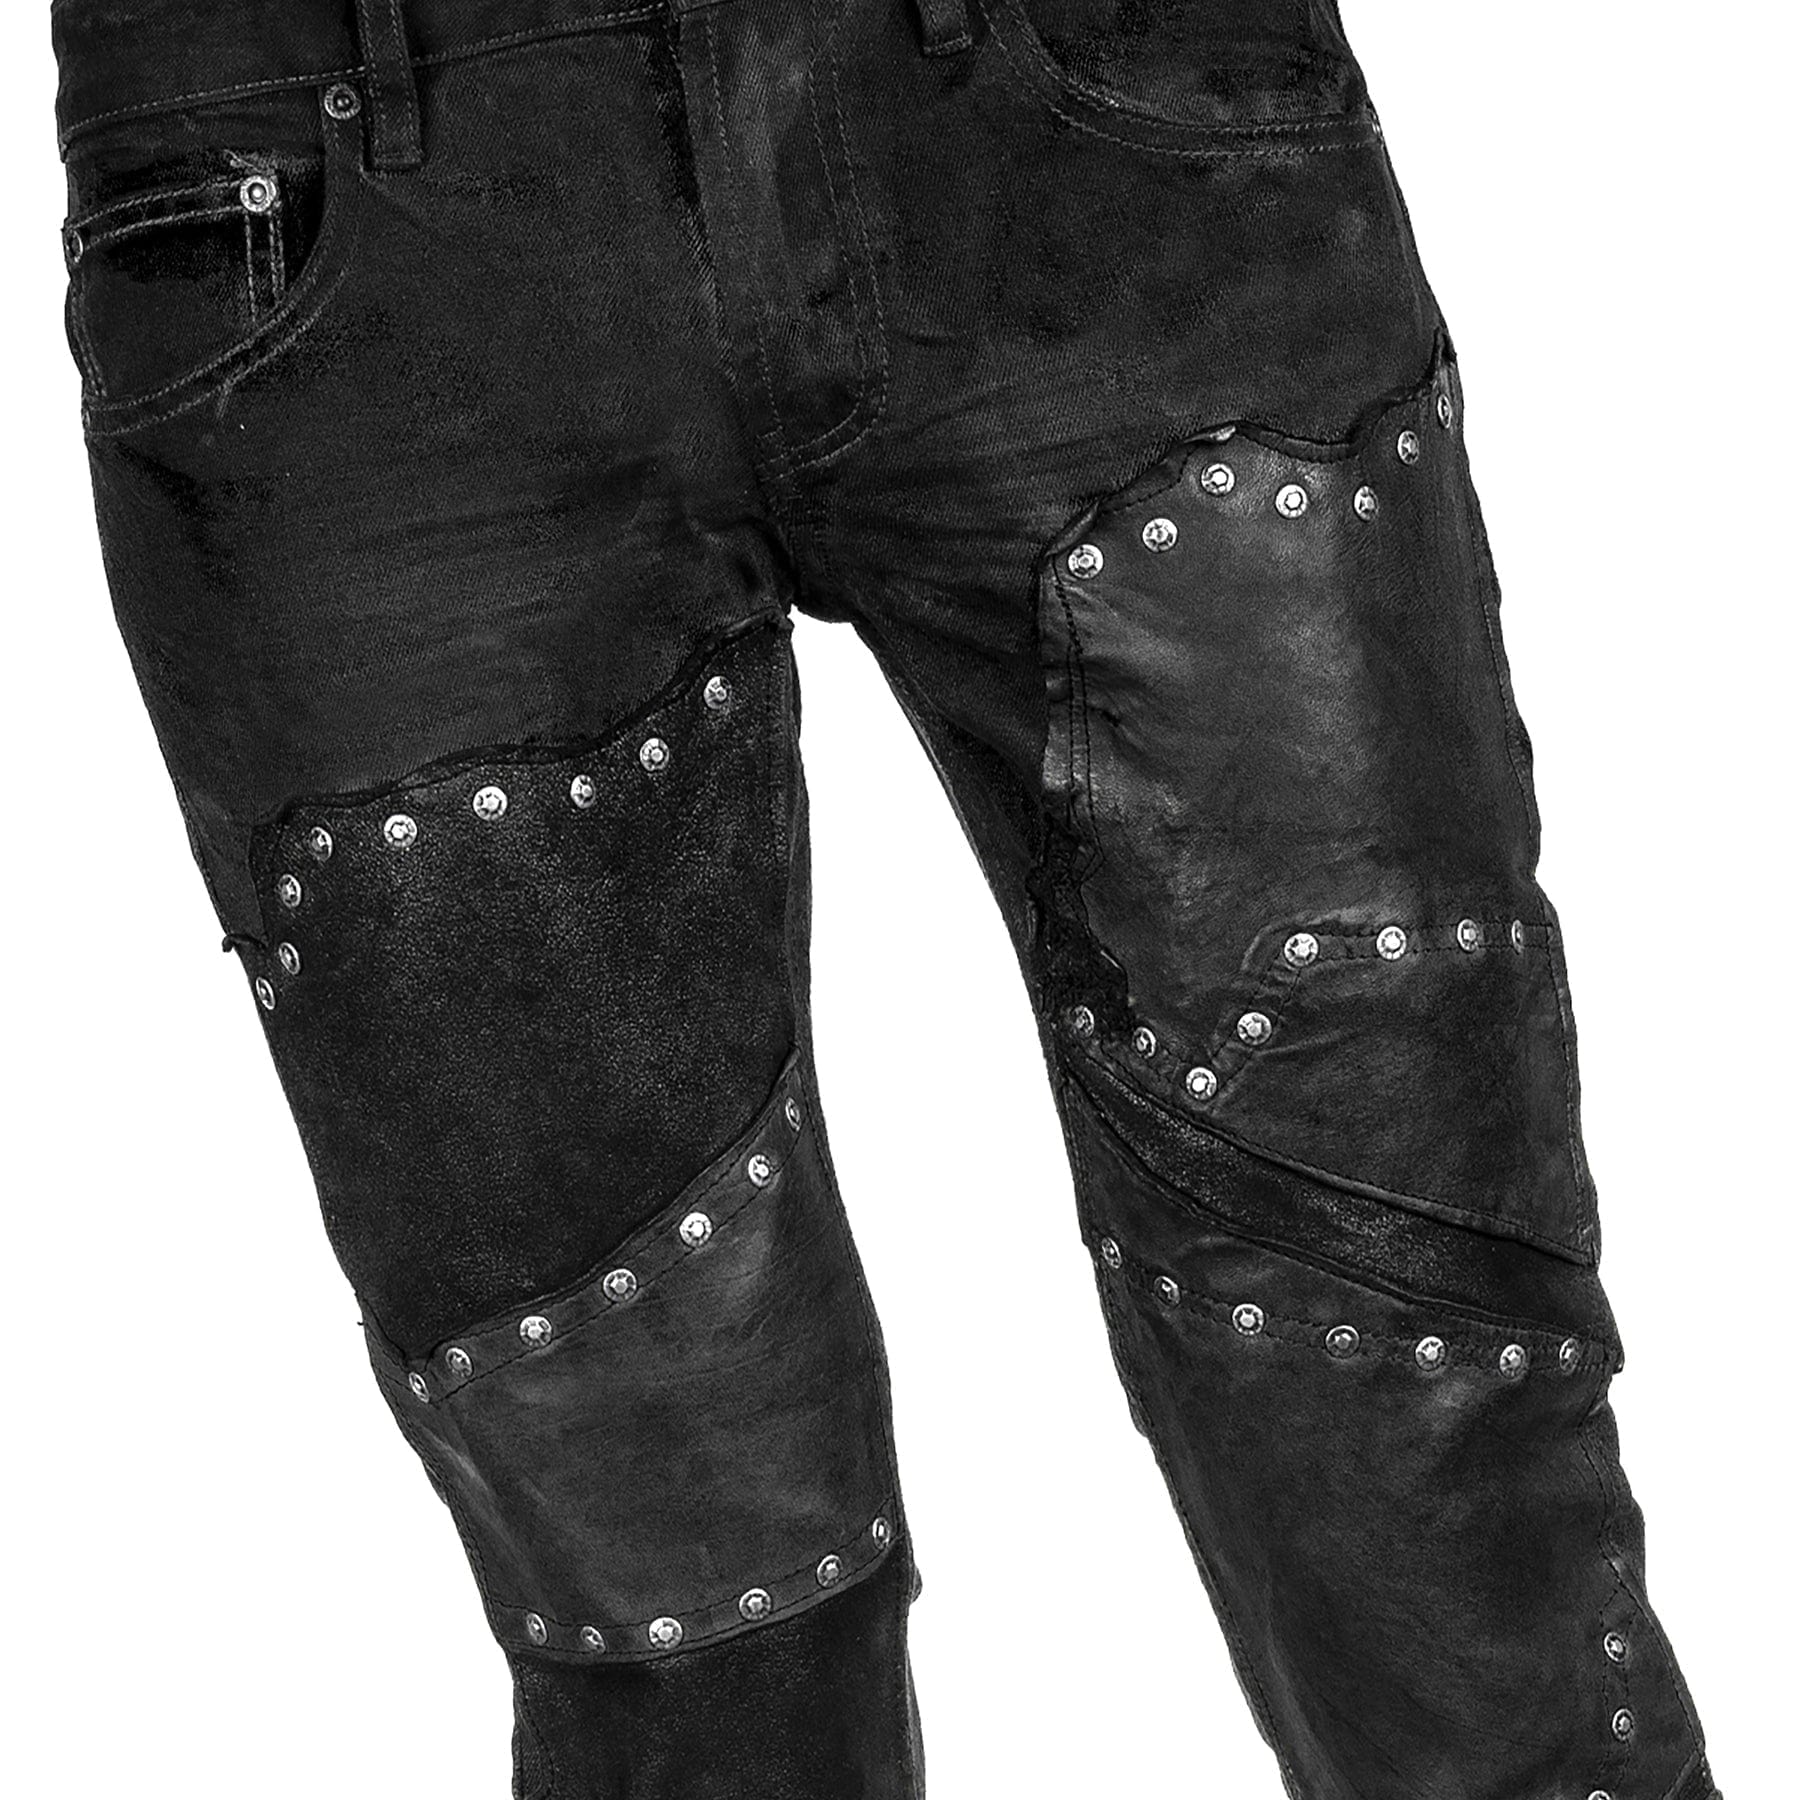 Wornstar Clothing mens custom pants. Handmade custom denim and leather rock pants. Rocker style black stretch denim custom made stage pants.